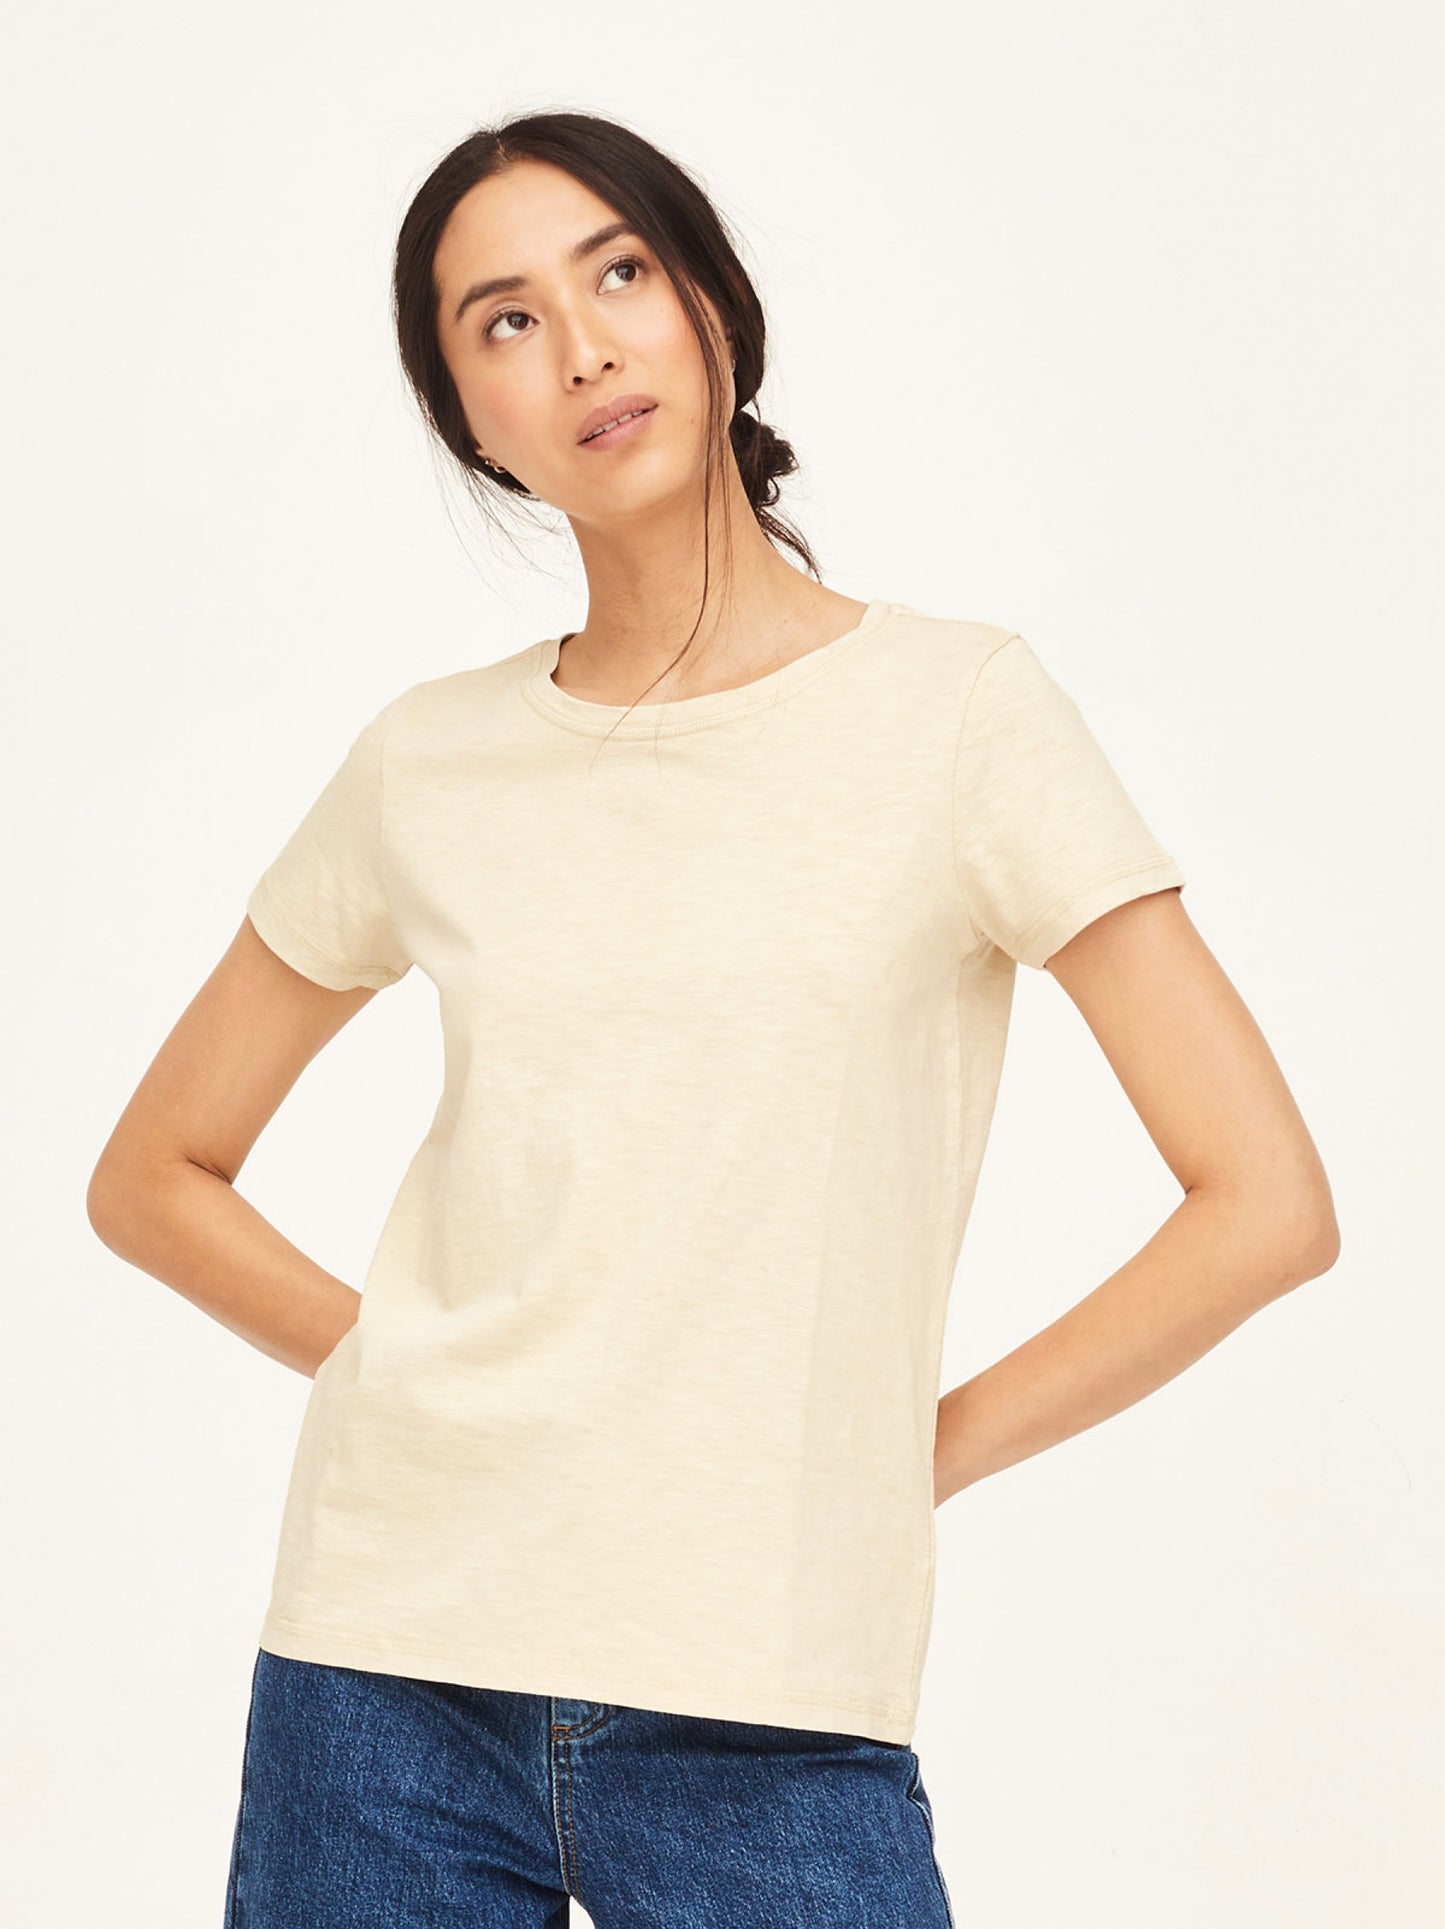 Tee - Cotton - T-shirt